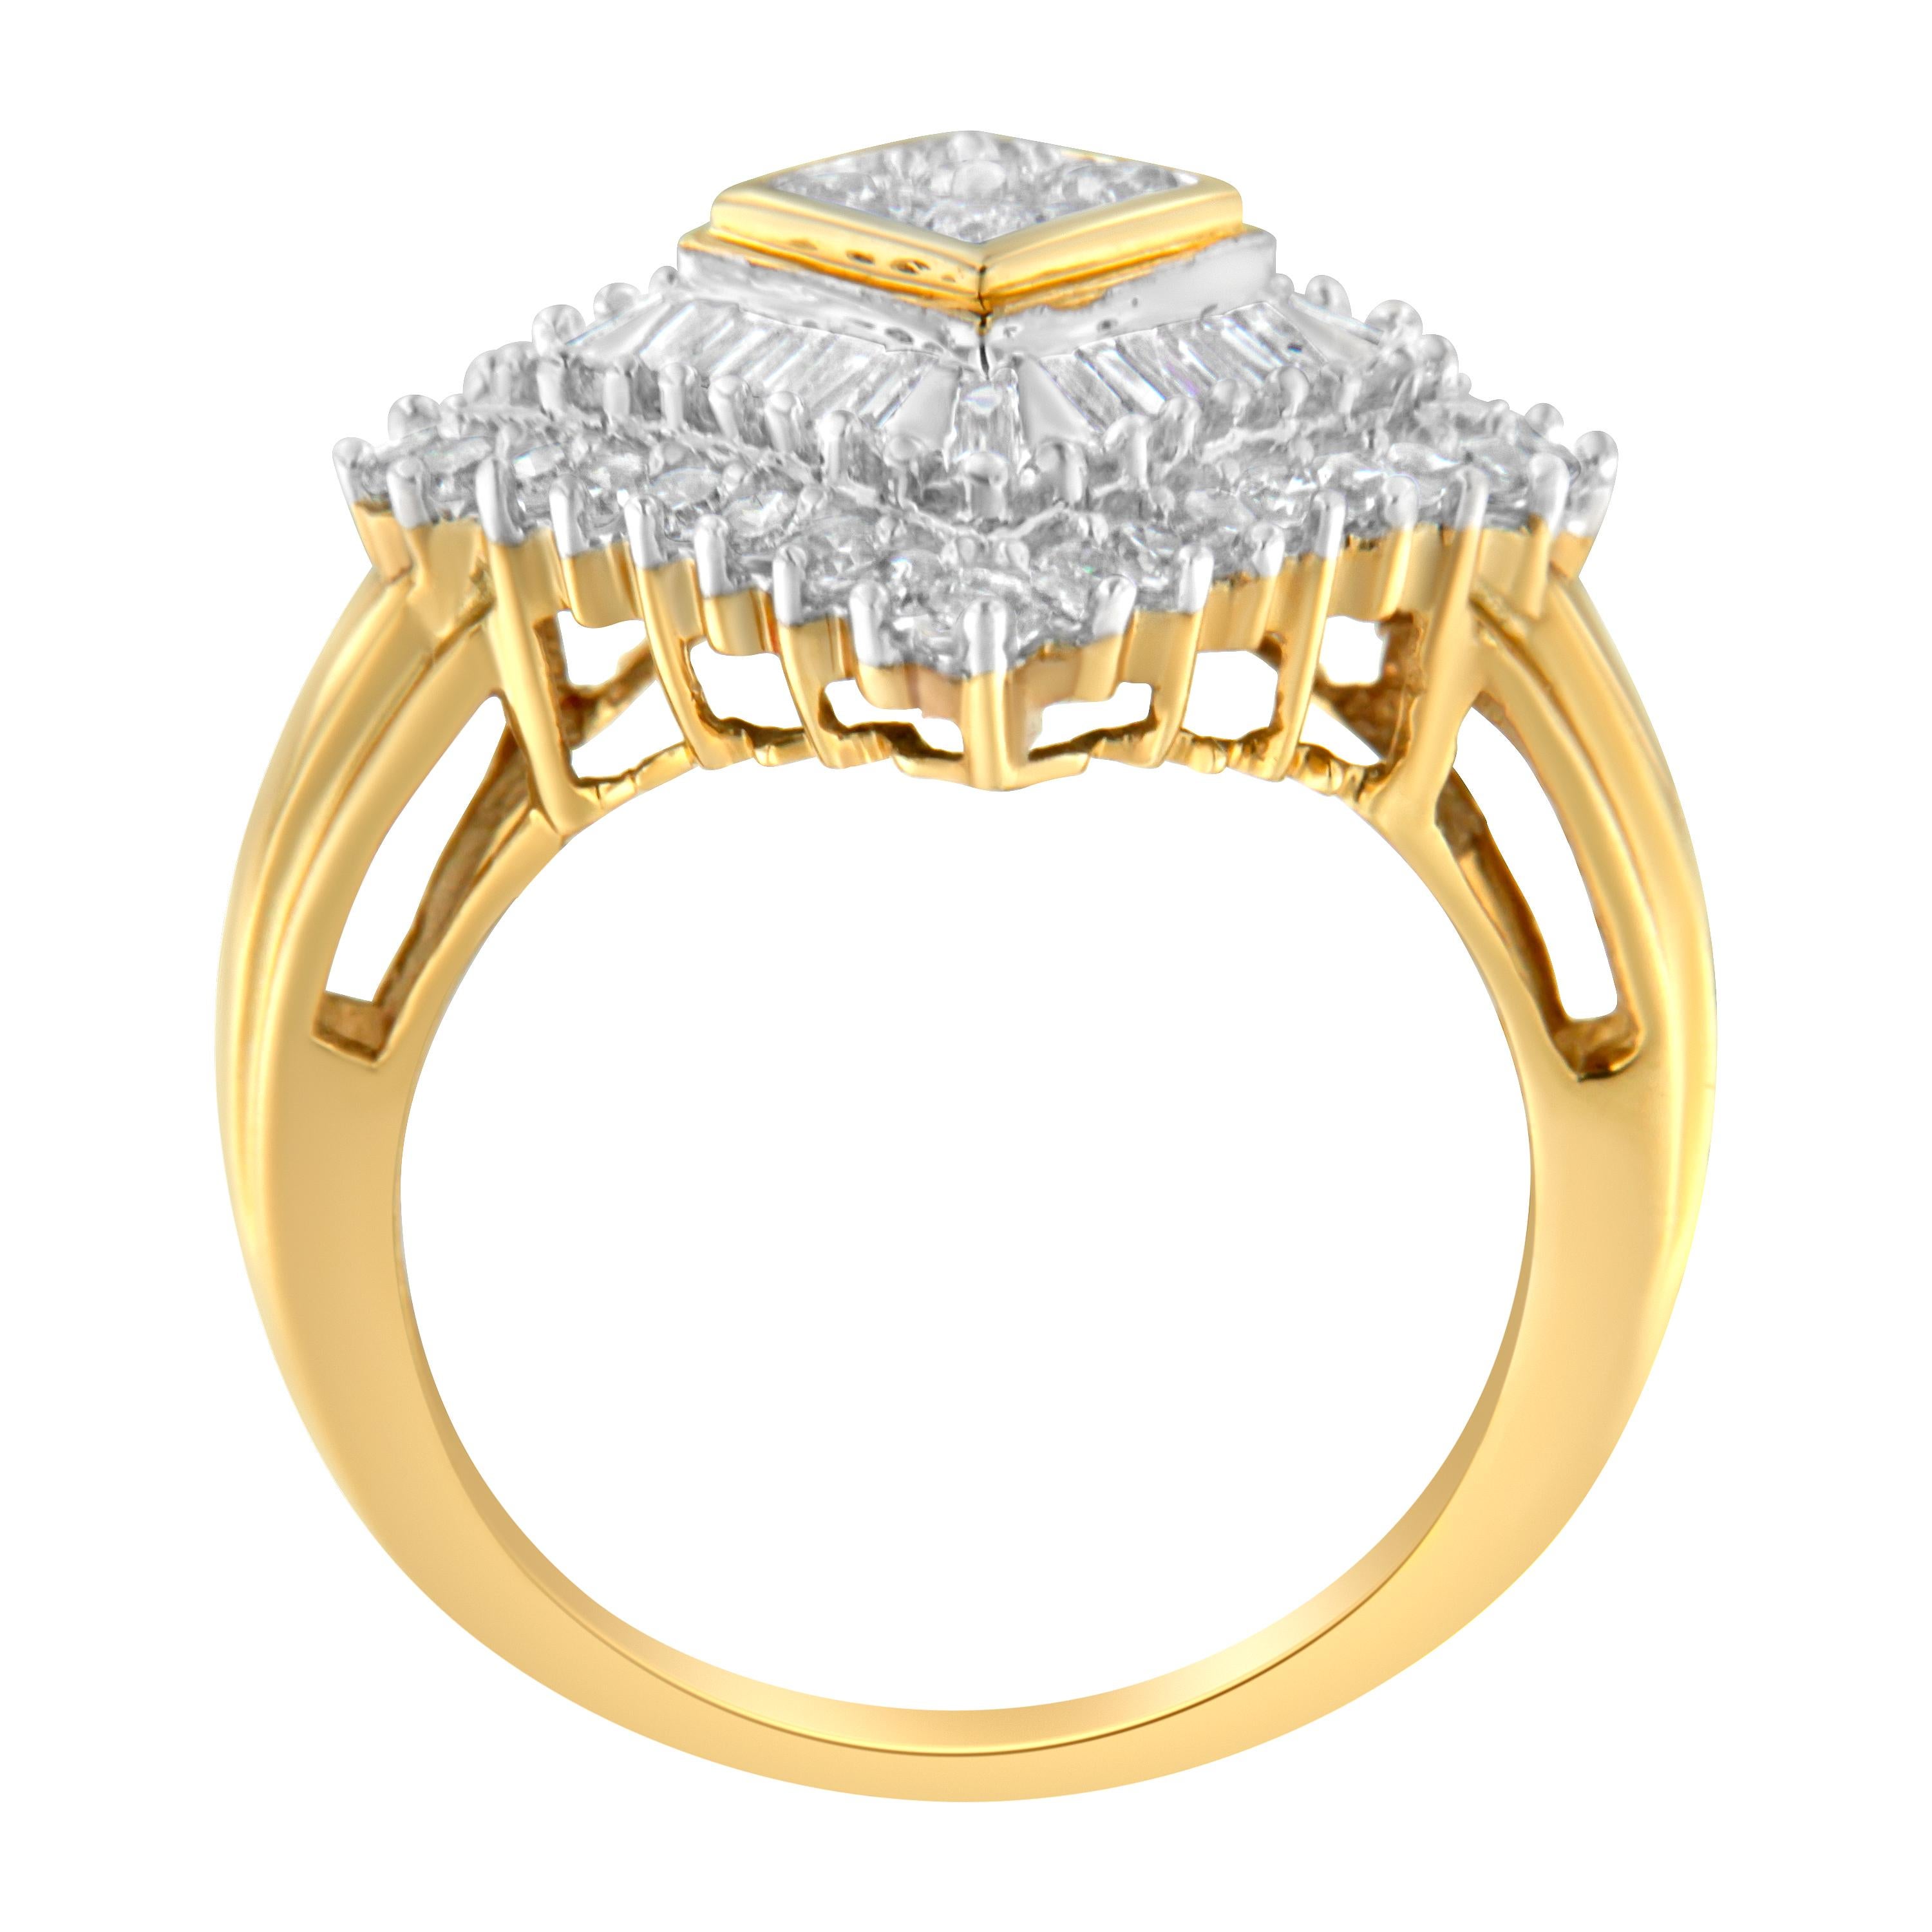 For Sale:  10K Yellow Gold 1.0 Carat Diamond Ballerina Ring 2